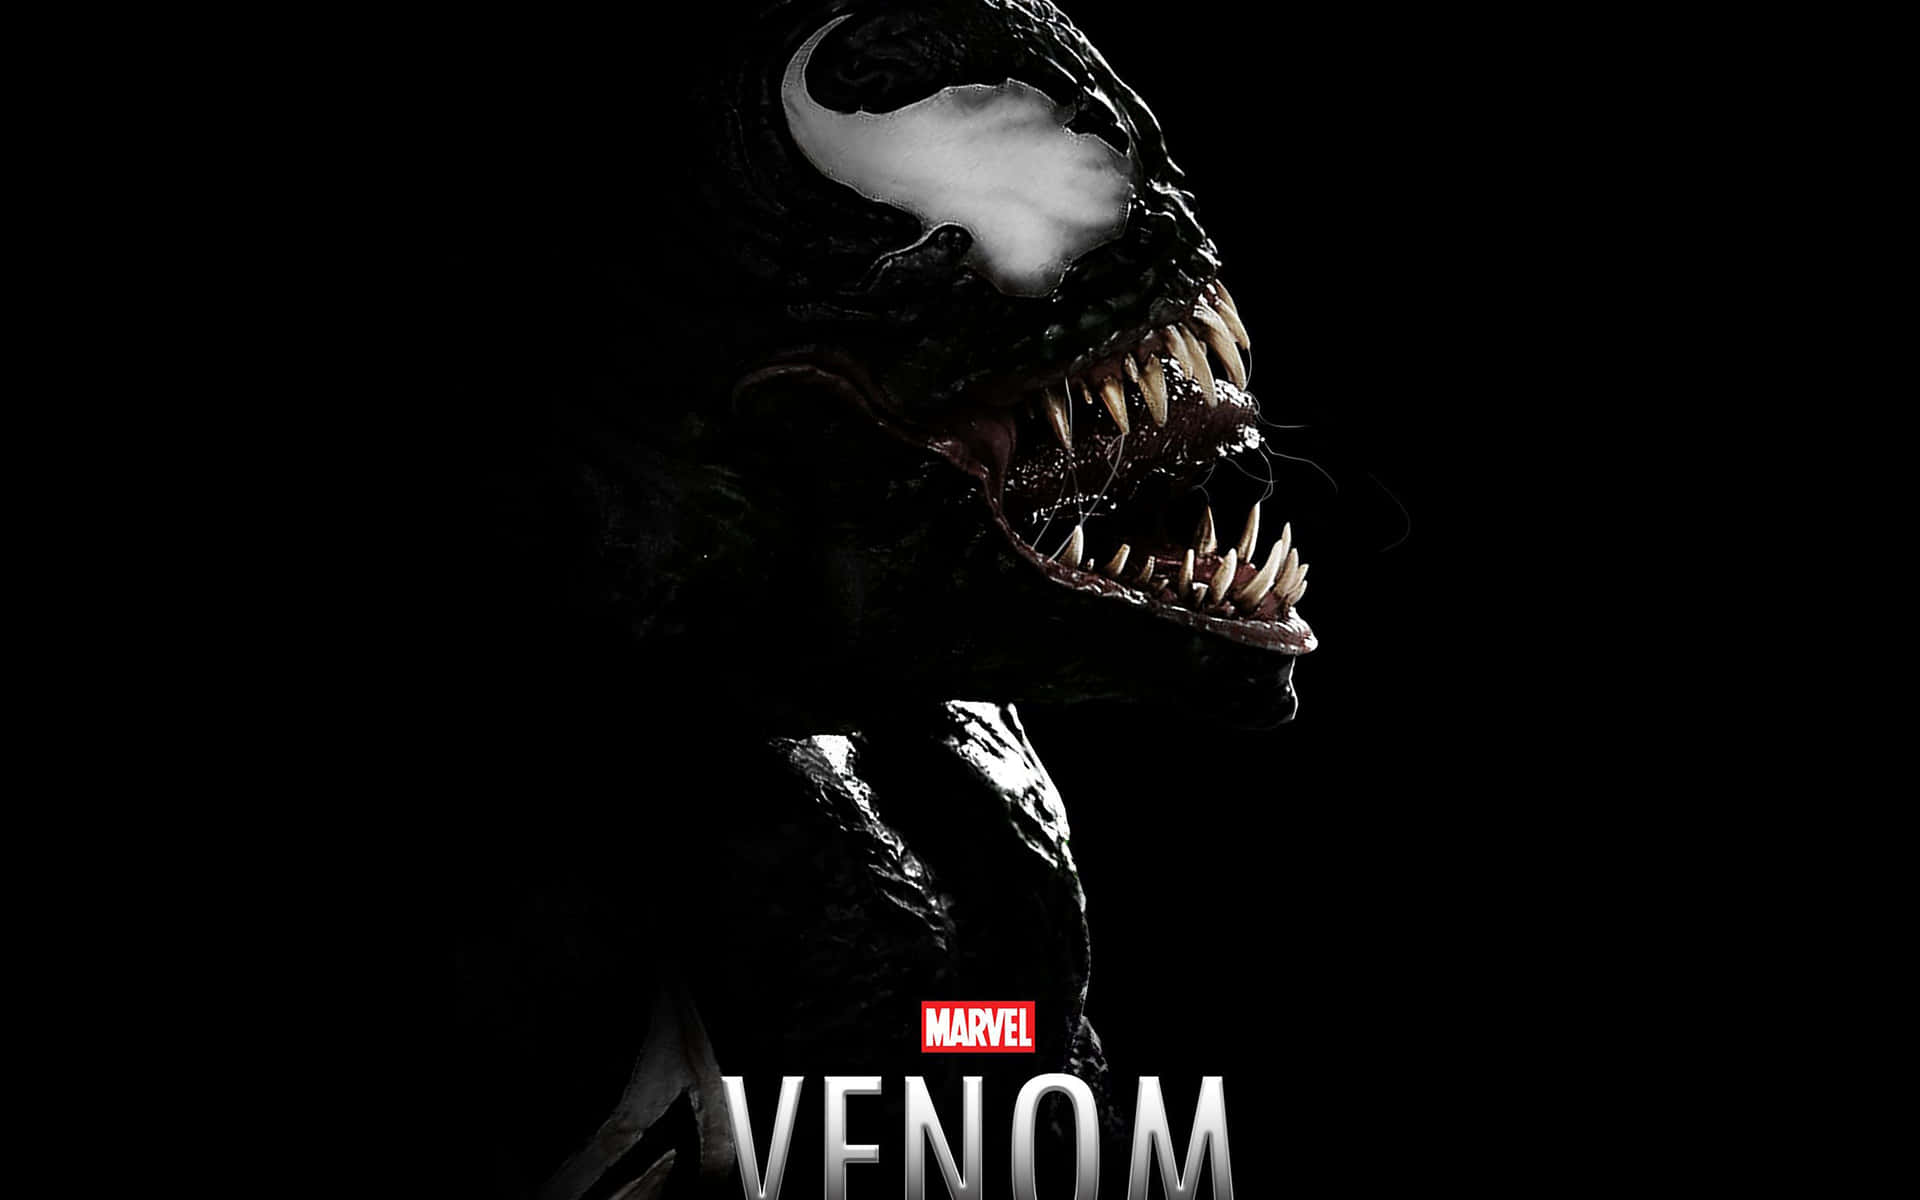 Unleash your dark destructive side with Black Venom Wallpaper